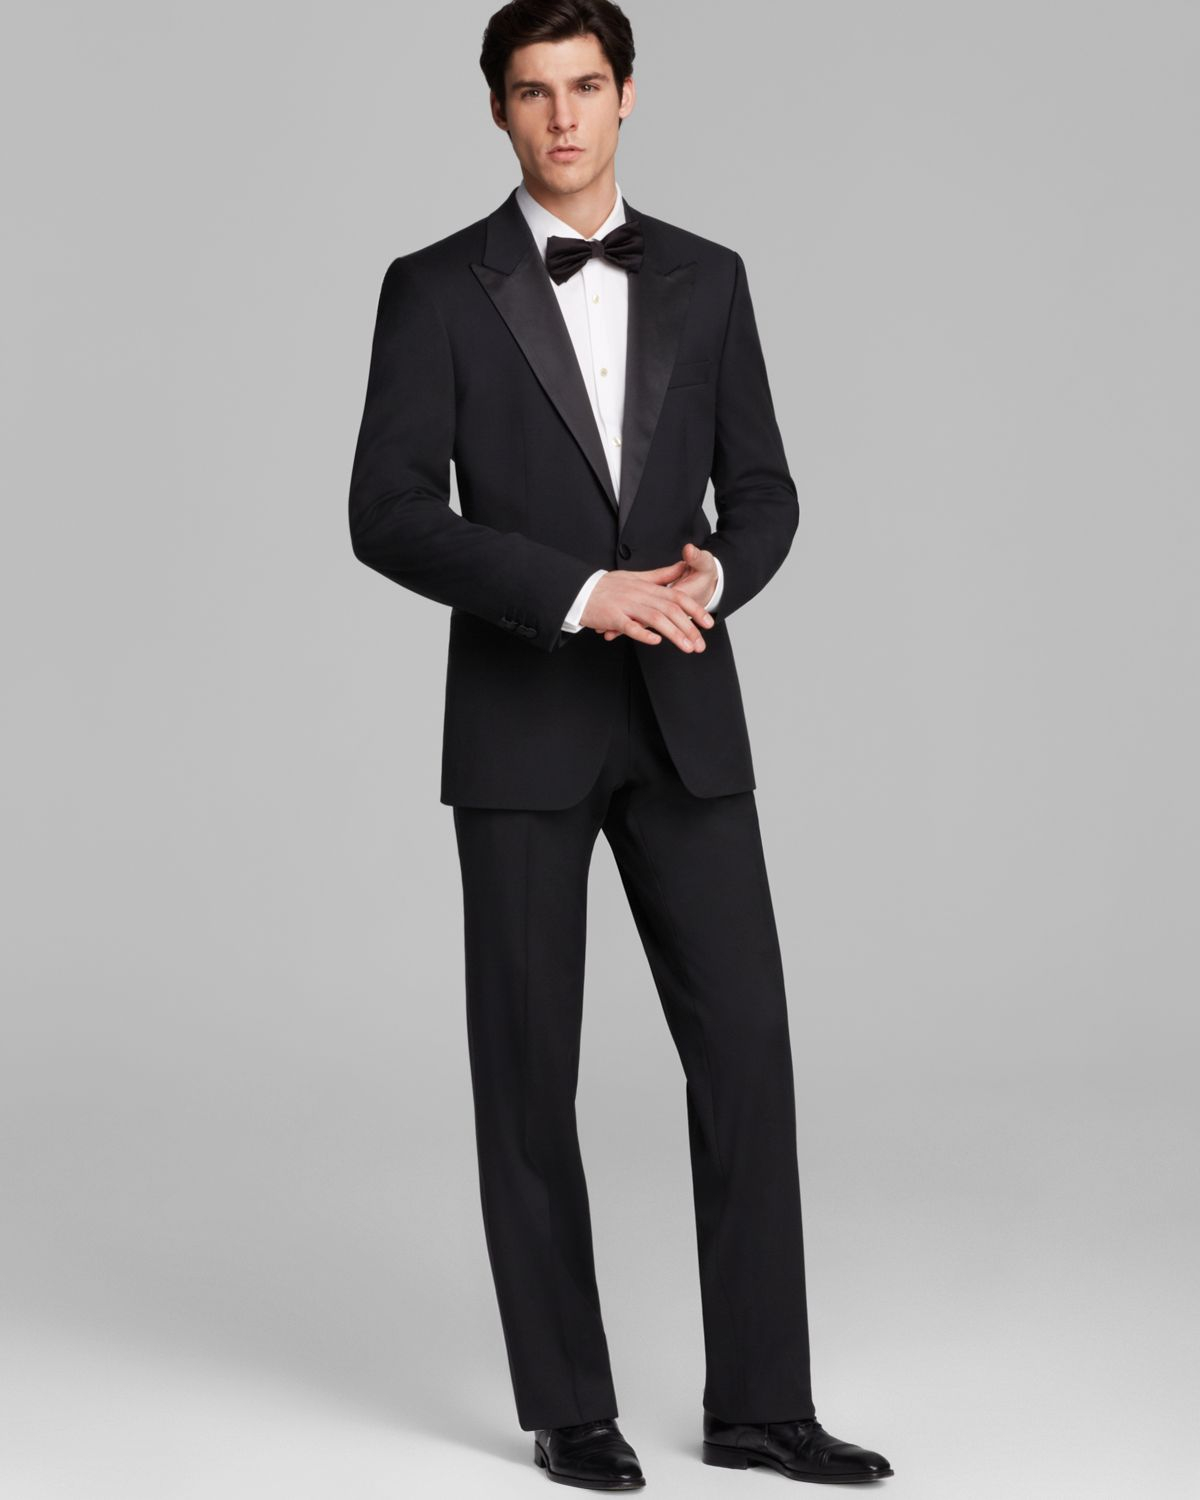 BOSS by Hugo Boss Boss Caiden/glamz Tuxedo Suit - Classic Fit in Black for  Men - Lyst